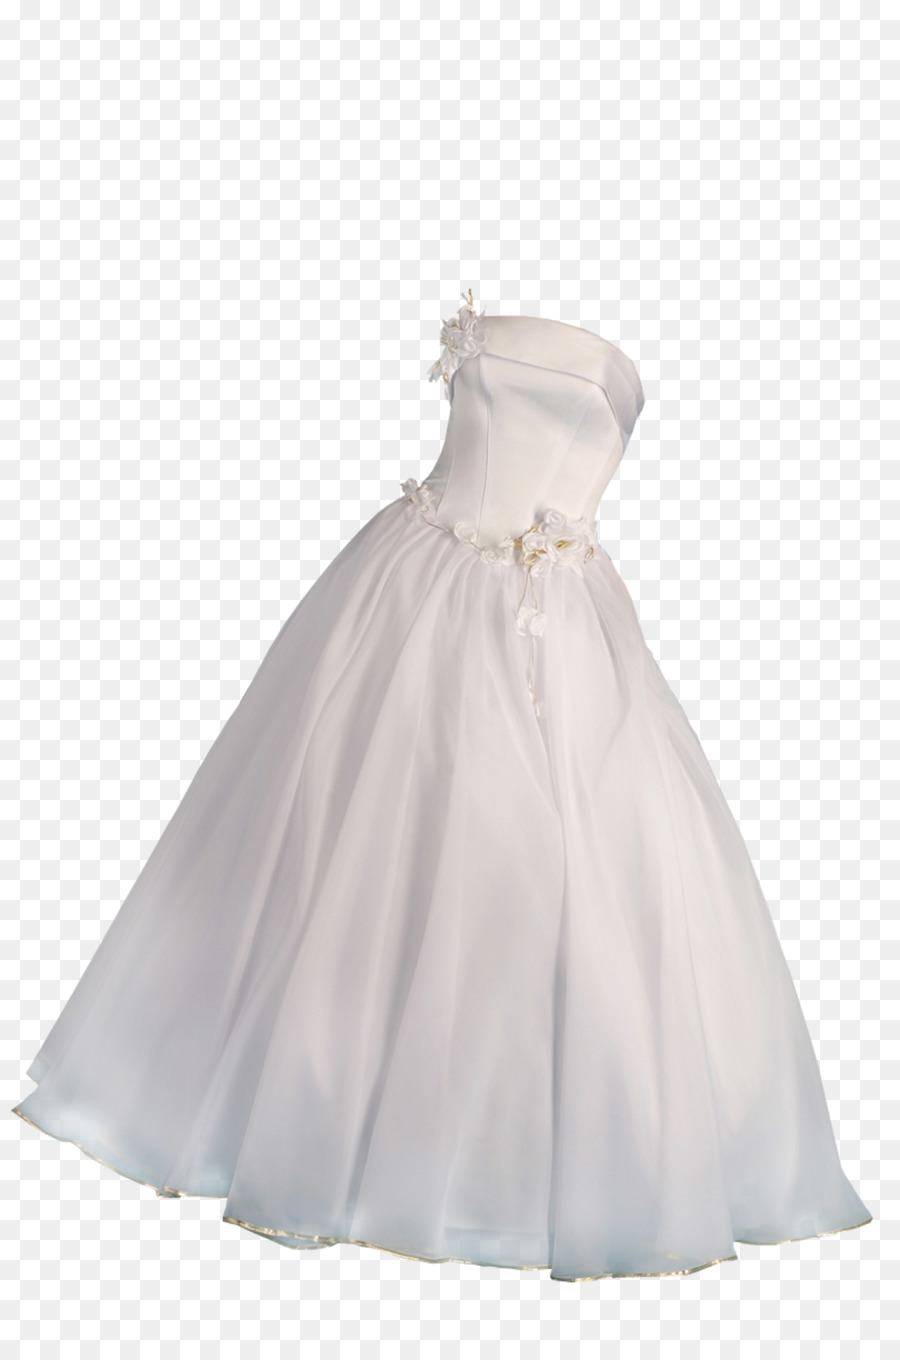 Wedding dress White - White Wedding Fashion png download - 1200*1800 - Free Transparent Wedding Dress png Download.